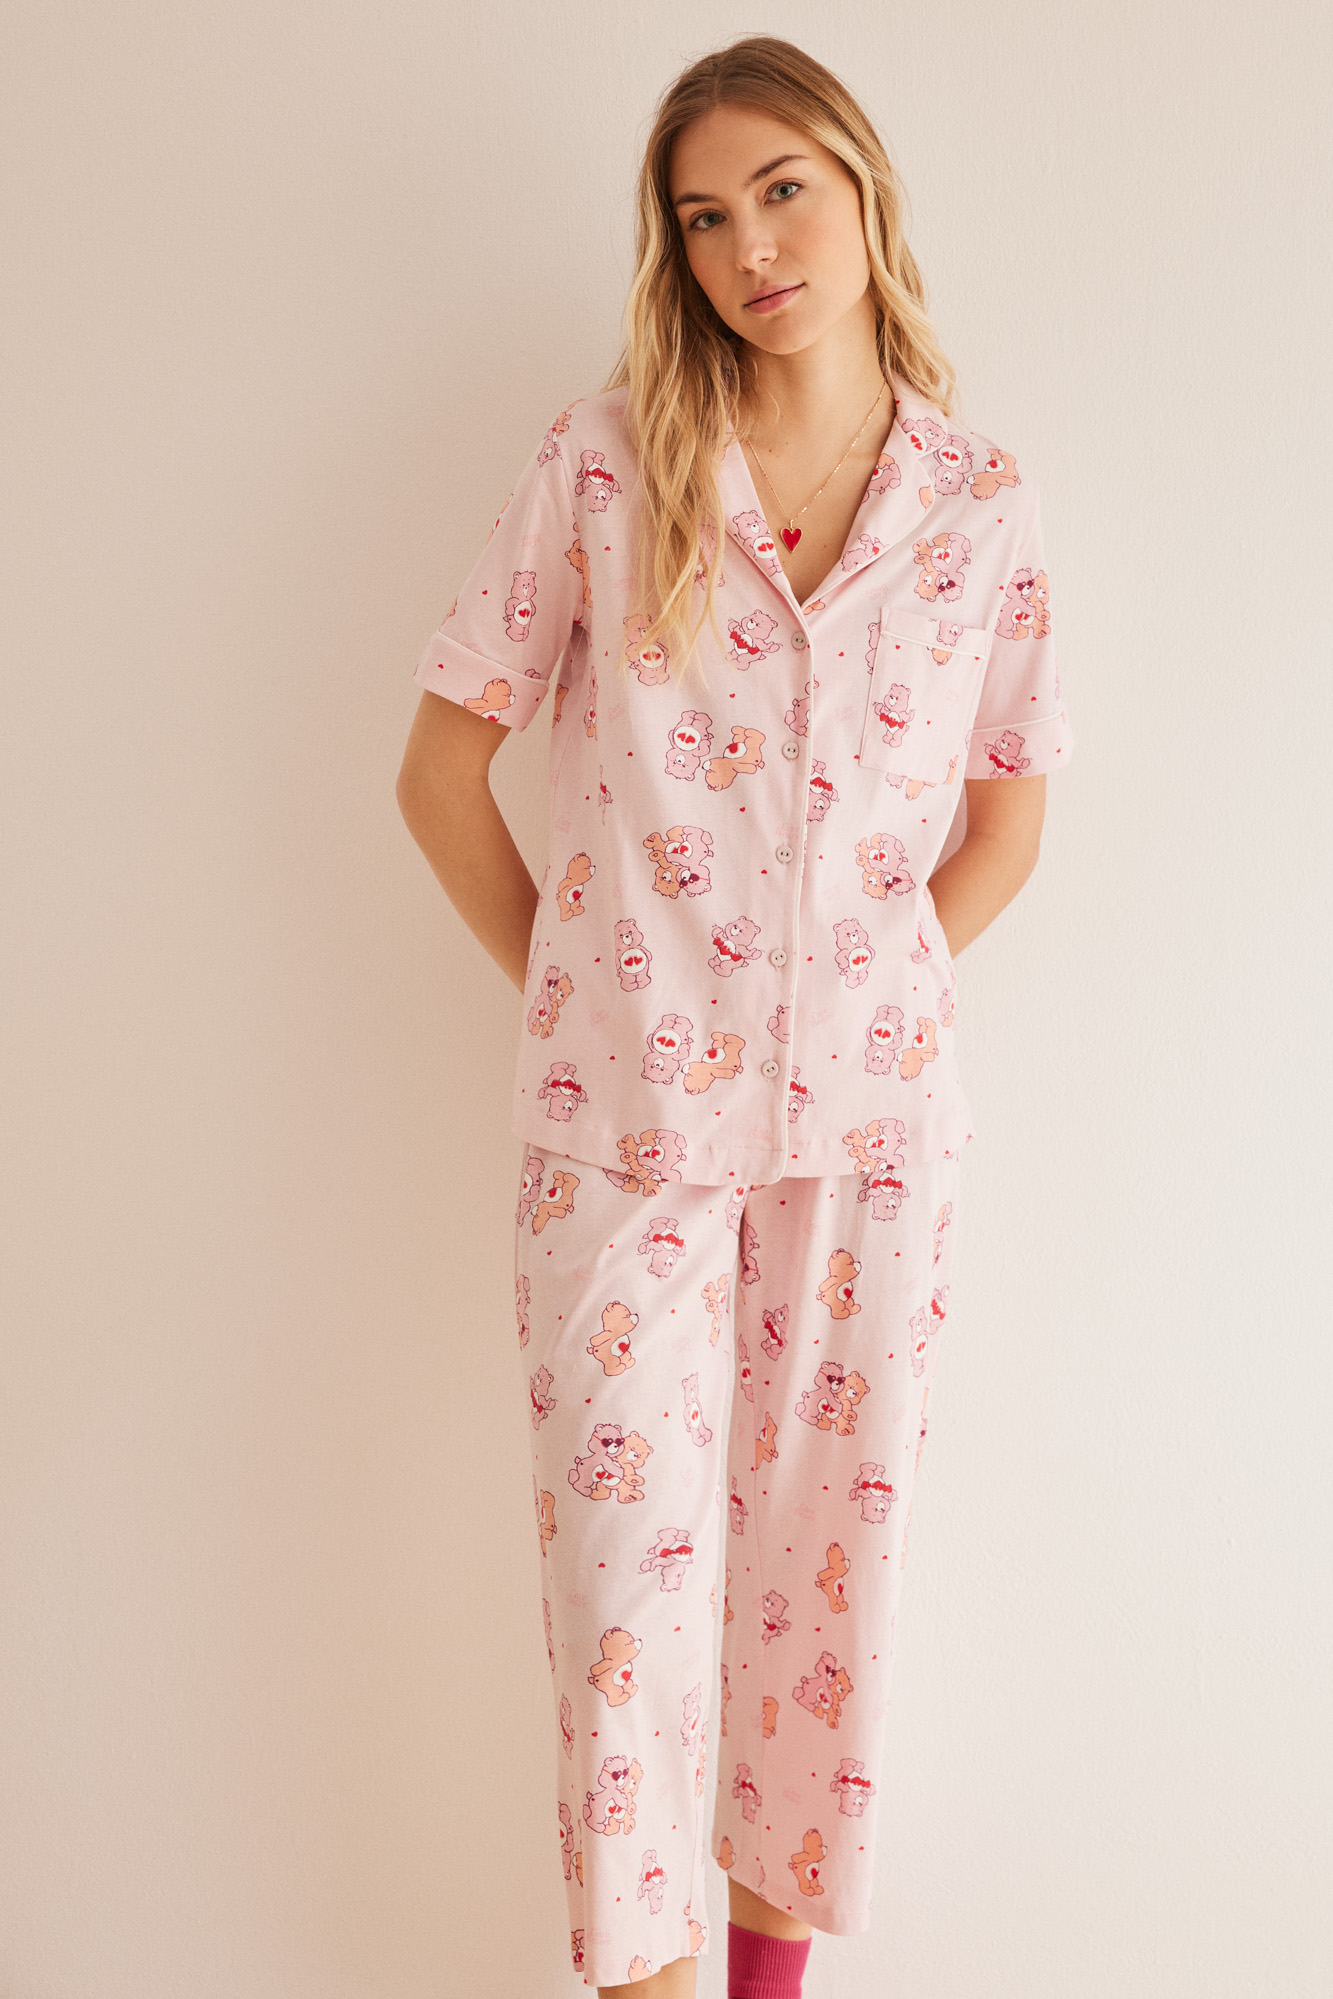 Care Bears Womens Pink Fleece Cuddle Season Pajamas Love A Lot Sleep Set XS  